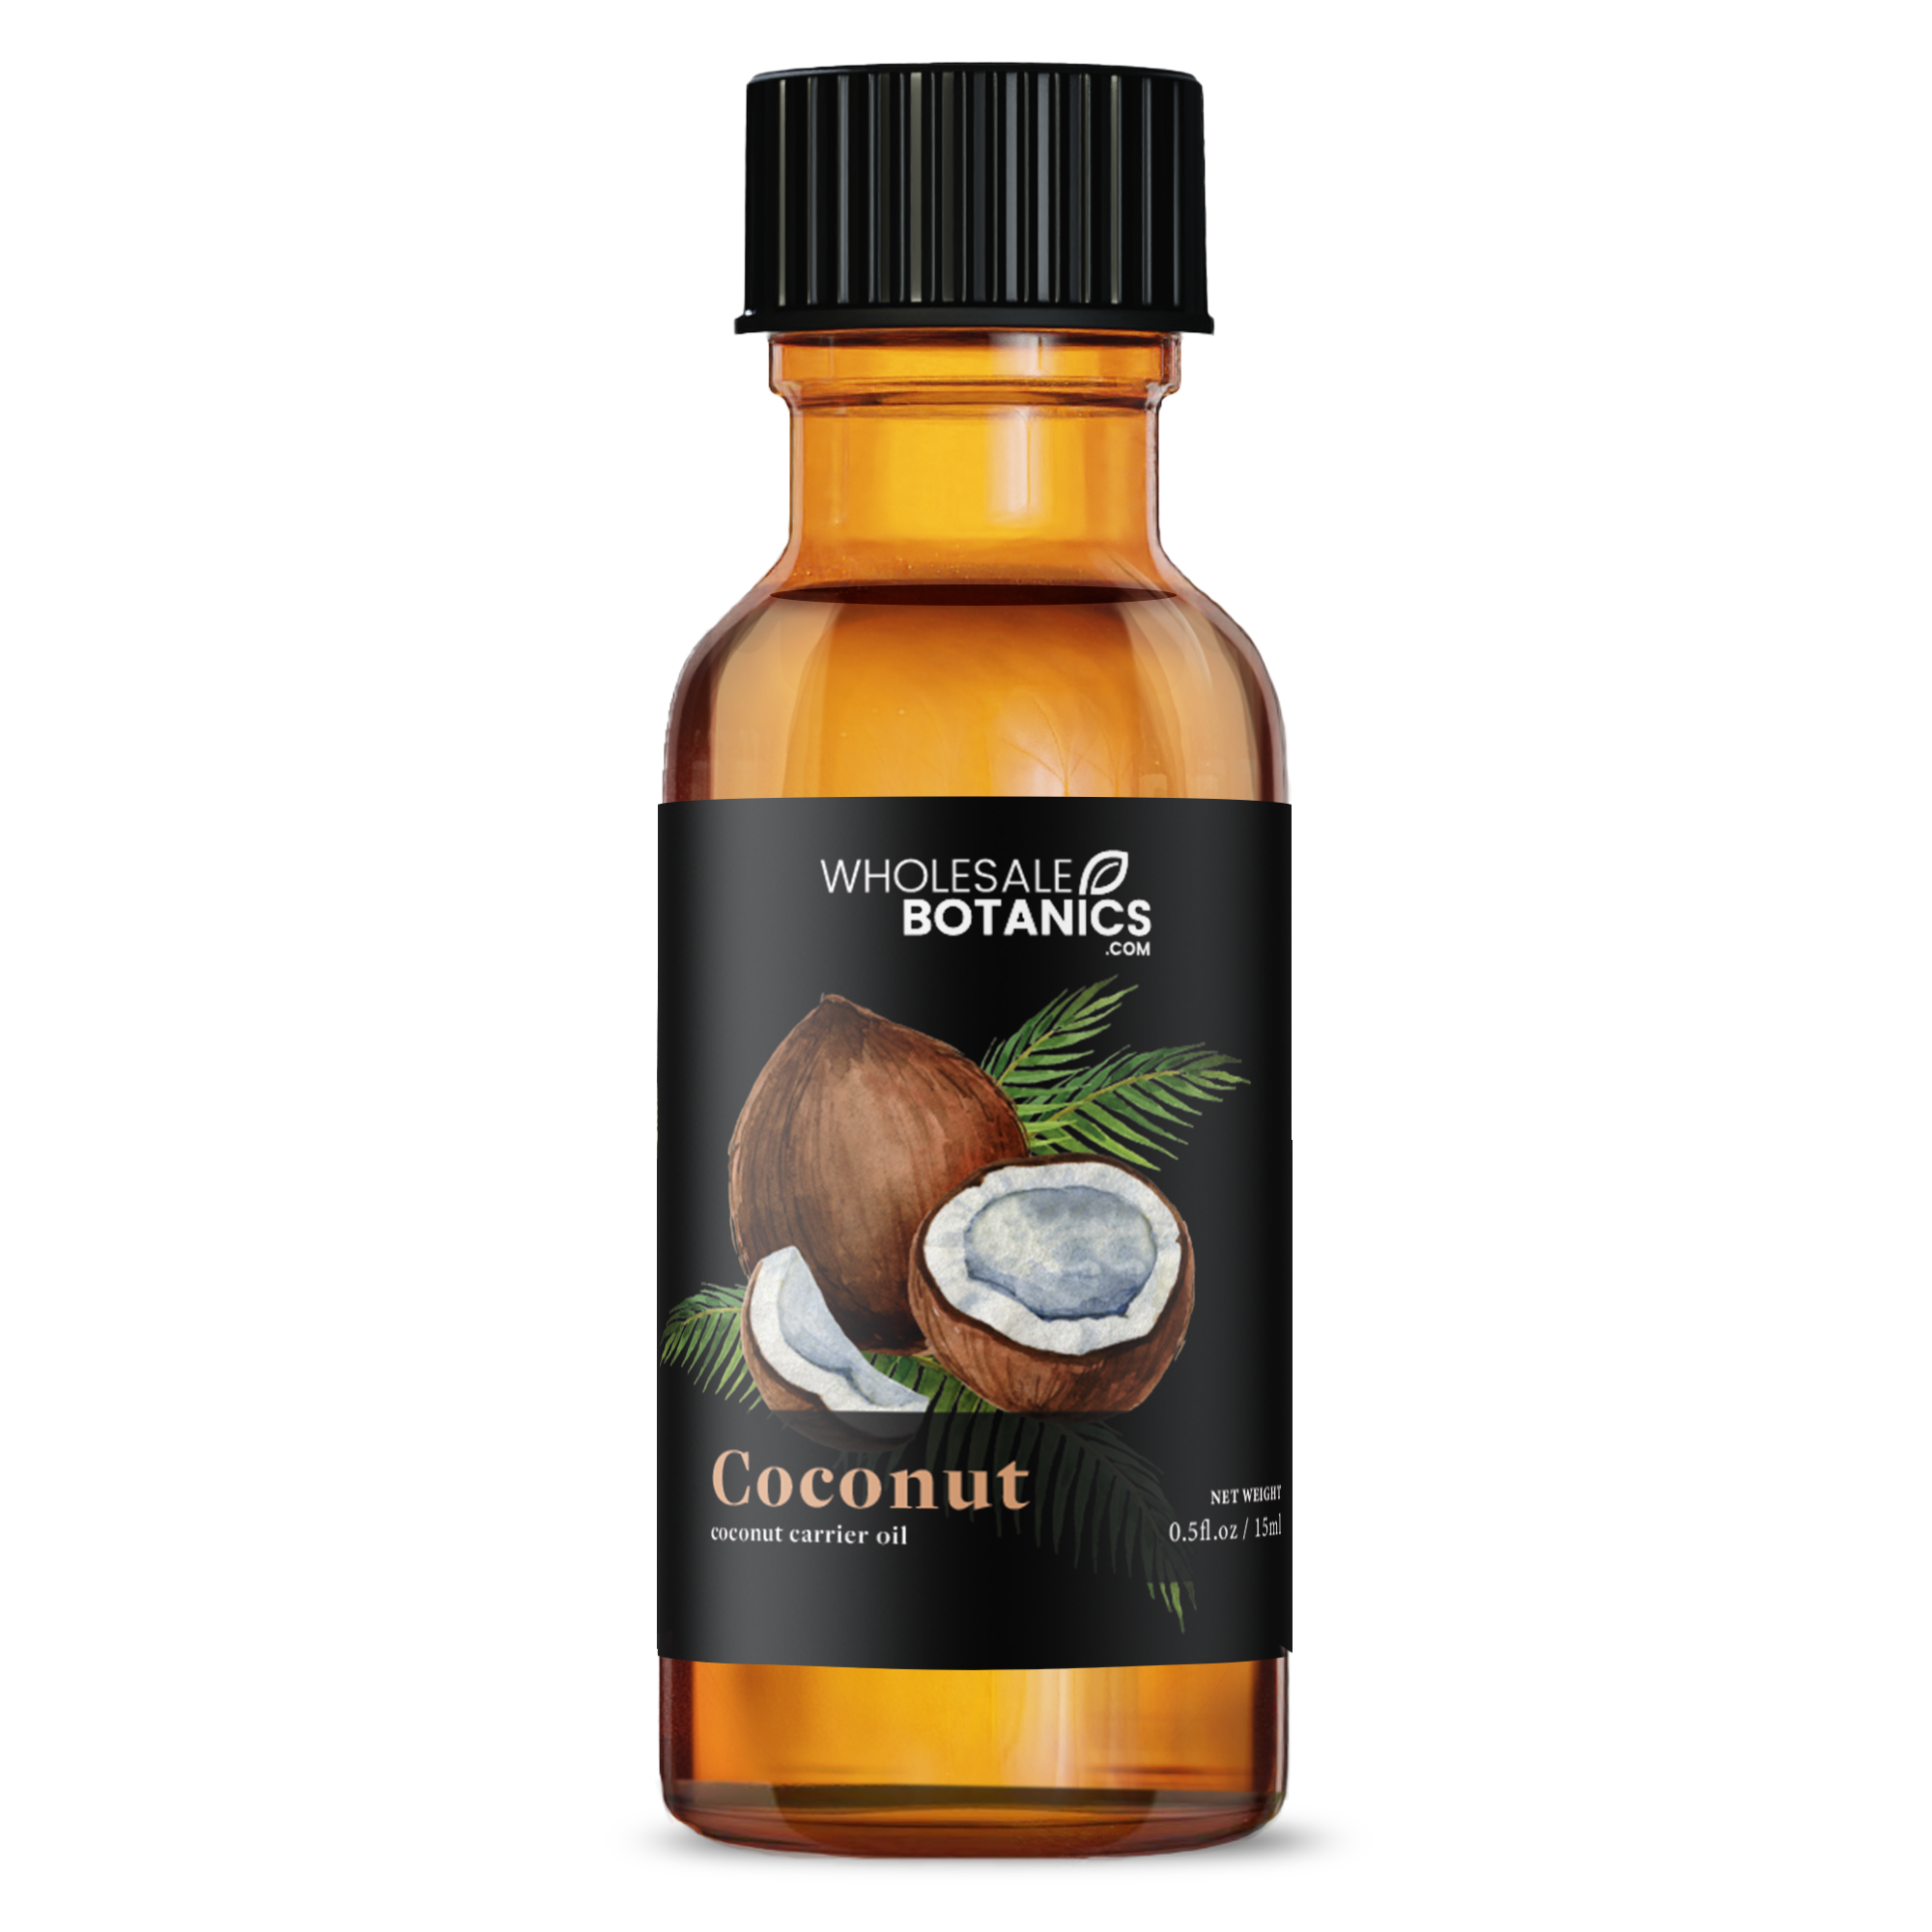 Now Foods Fractionated Coconut Oil - 16 fl oz bottle